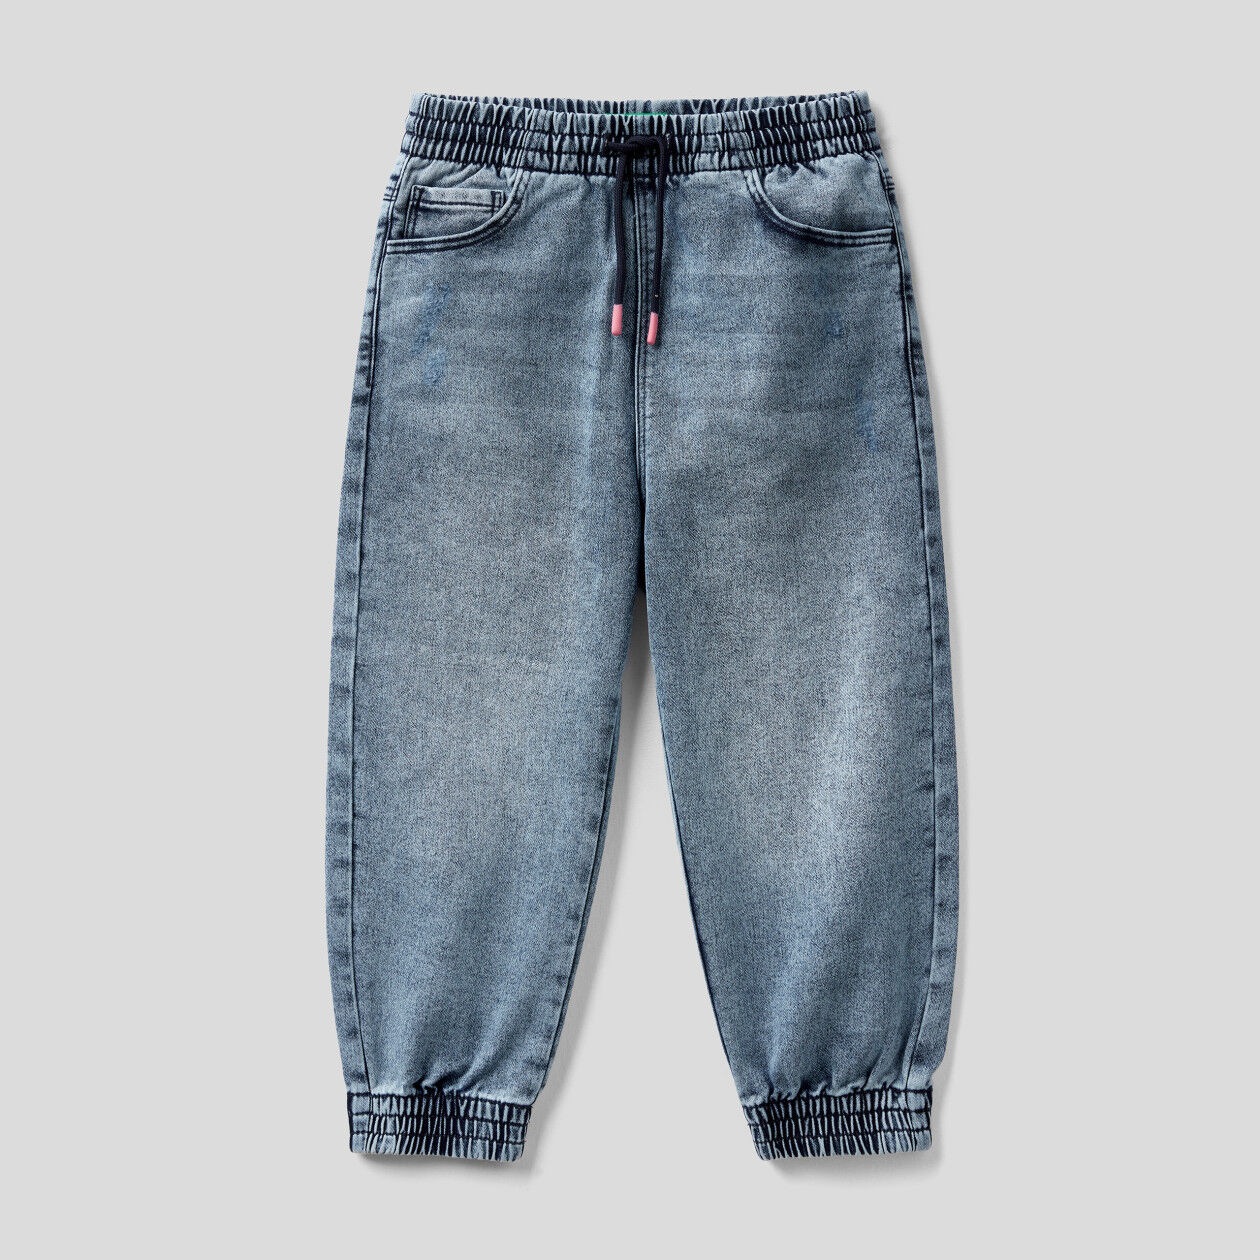 Shorts Tinta Unita In Puro Cotone United Colors of Benetton Abbigliamento Pantaloni e jeans Shorts Pantaloncini 